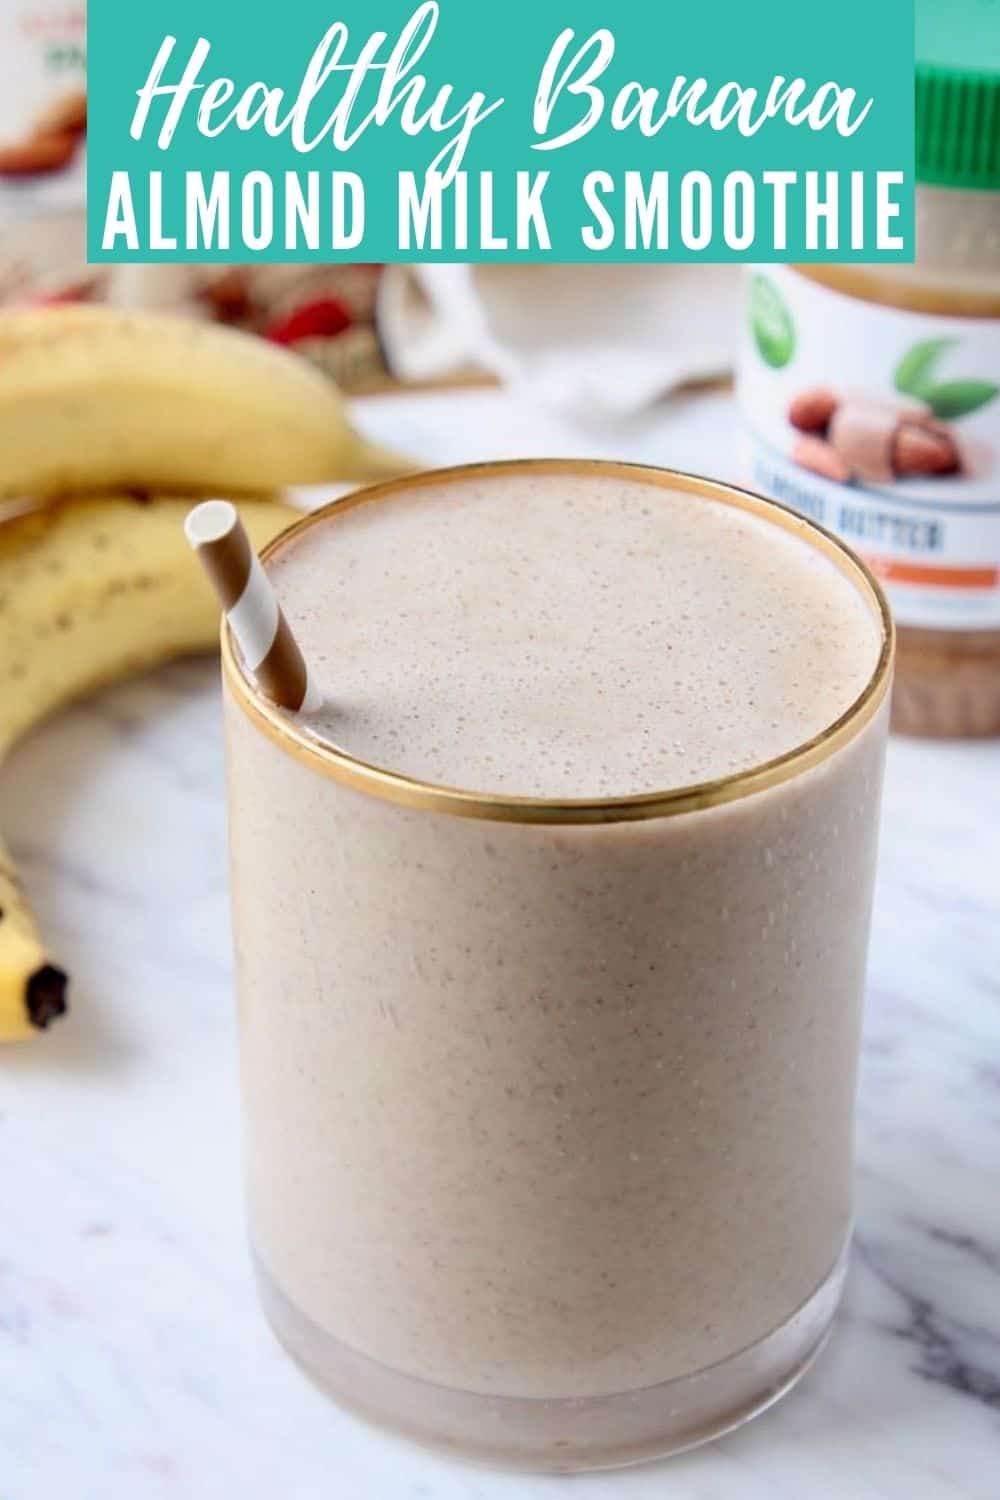 Healthy Banana Almond Milk Smoothie Recipe - WhitneyBond.com